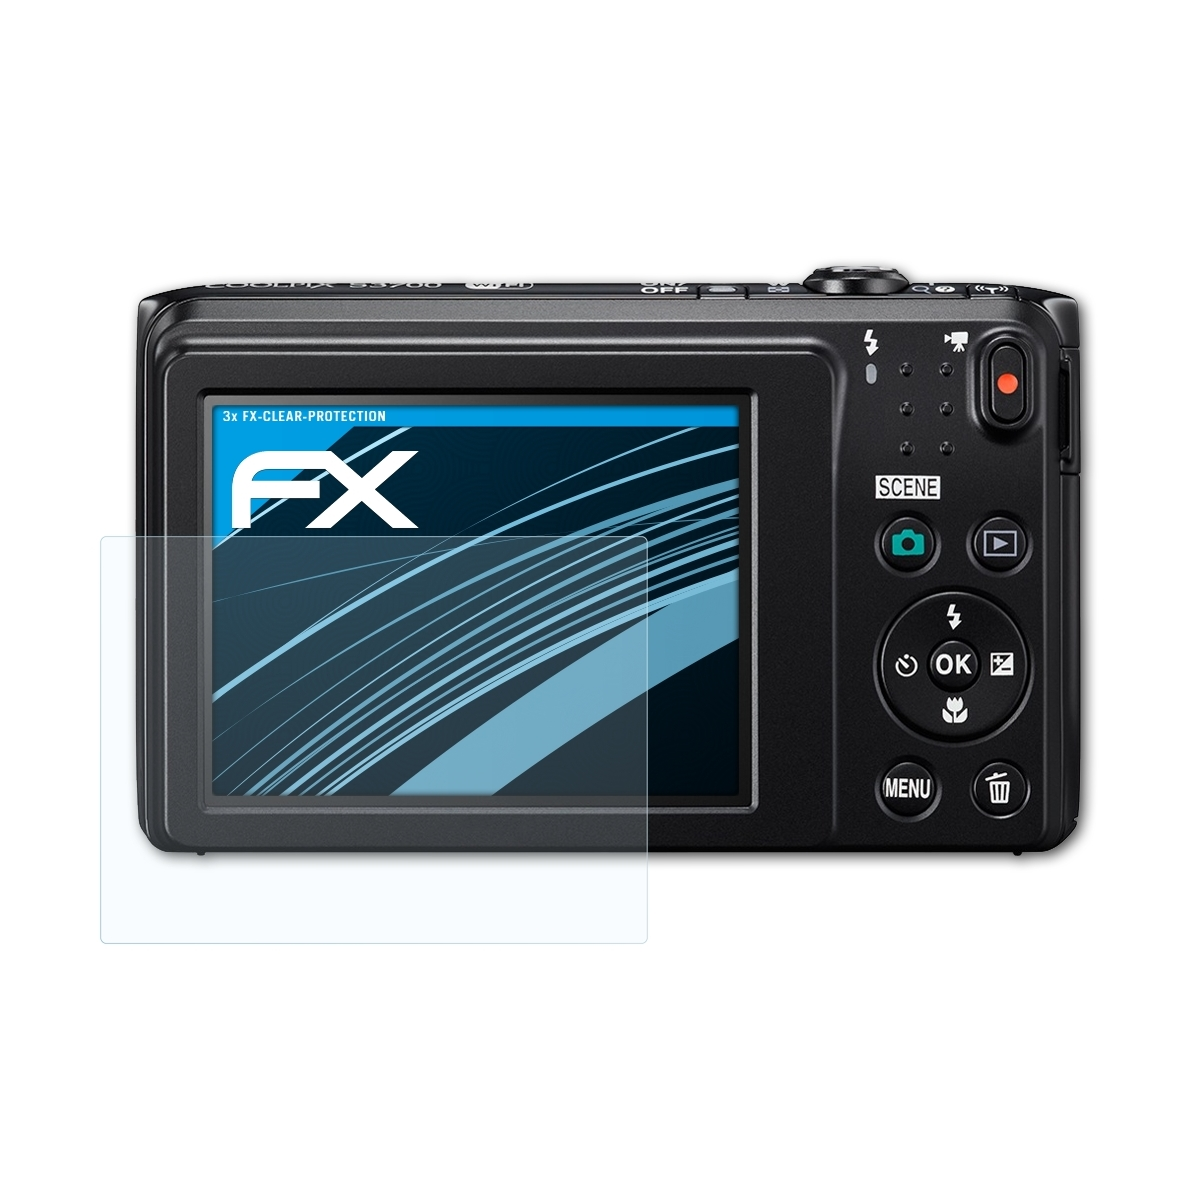 S3700) FX-Clear ATFOLIX Coolpix Displayschutz(für Nikon 3x